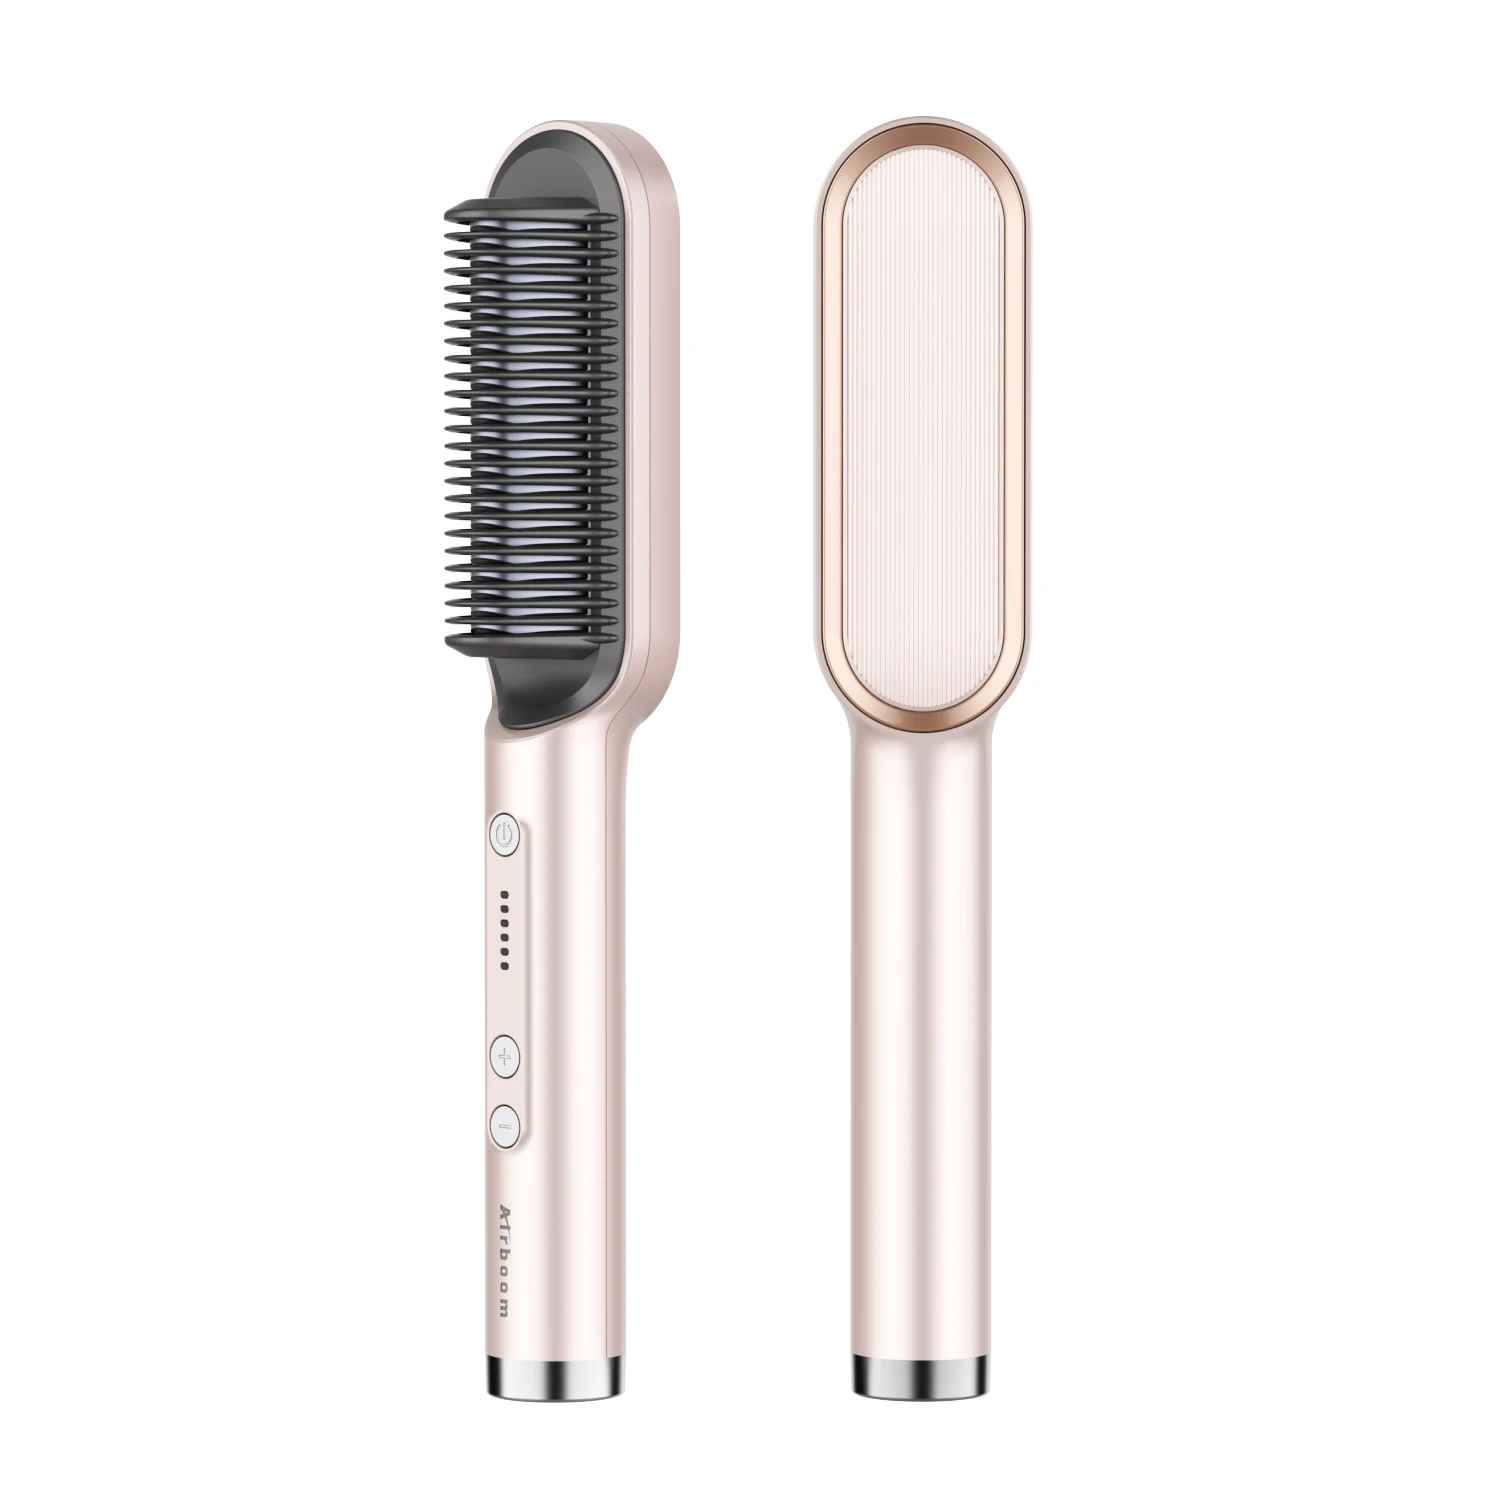 The new 2020 Amazon popular straight hair comb straight roll dual-purpose straightener negative ion straight hair comb beard com